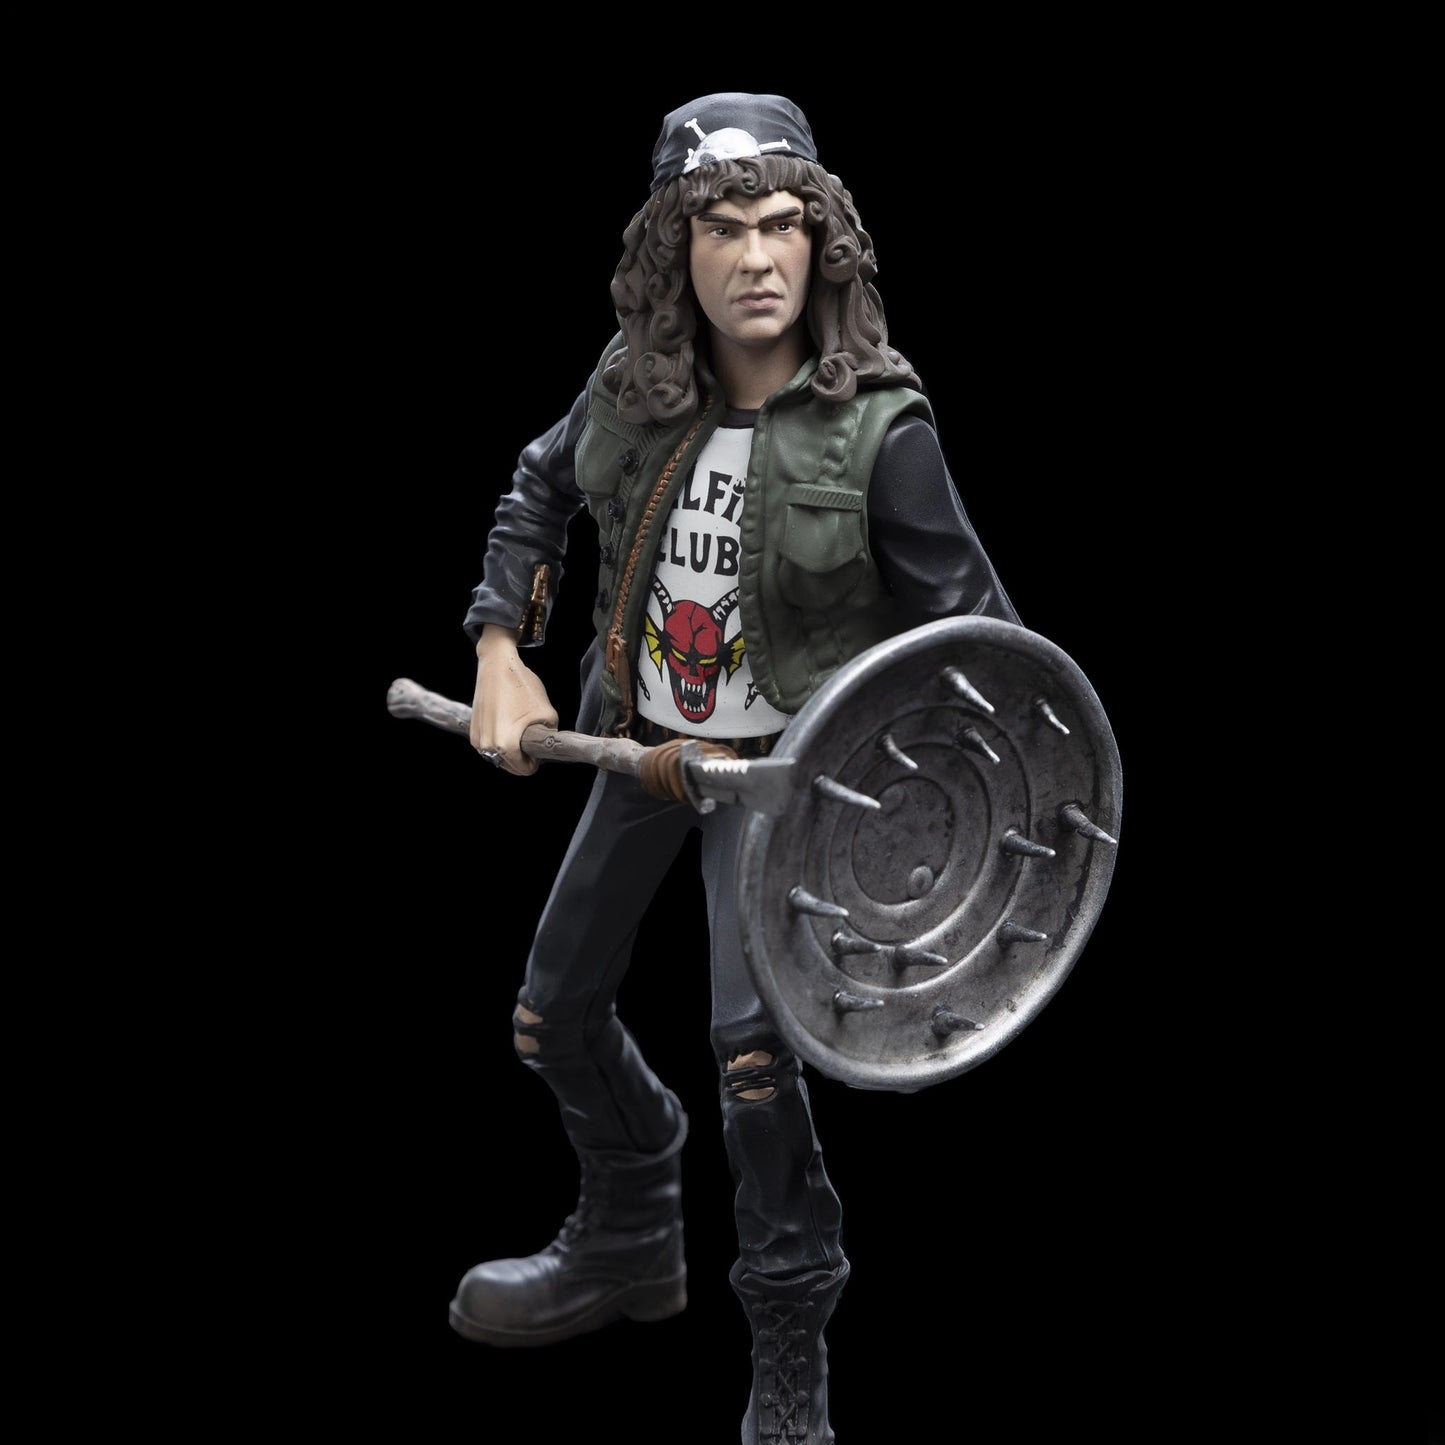 Eddie Munson with Shield (Stranger Things) Limited Edition Mini Epics Statue by Weta Workshop